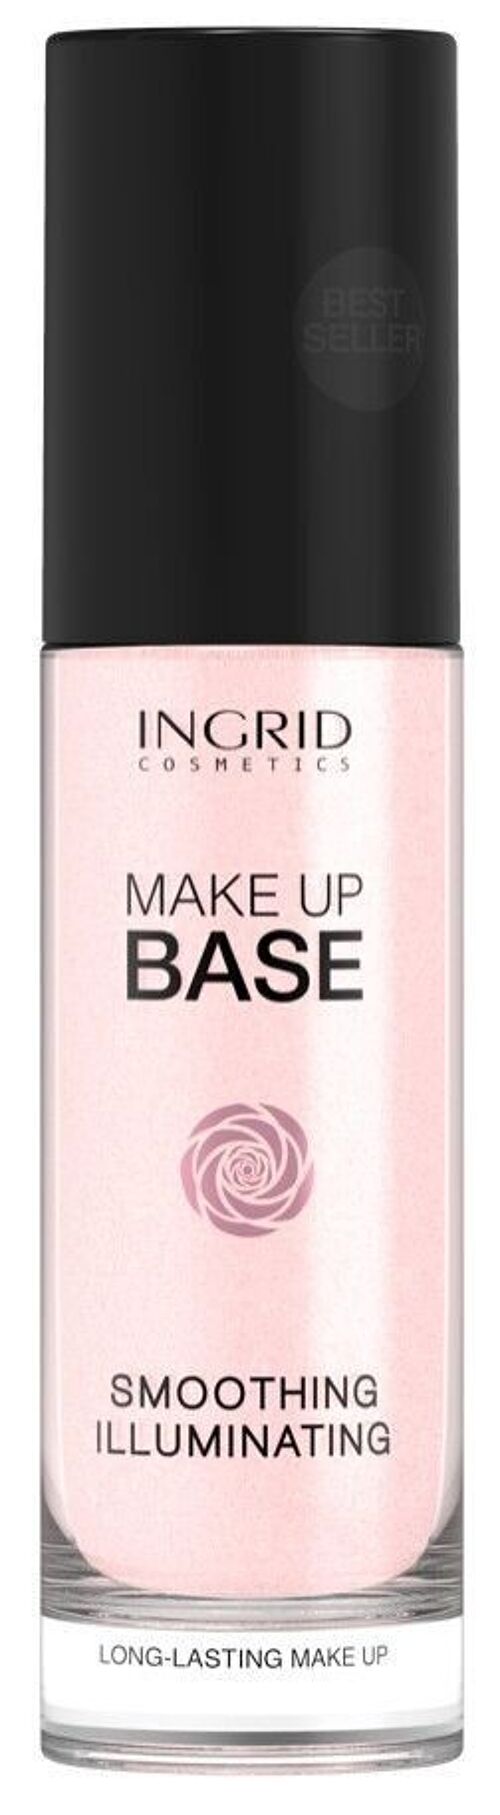 Base de teint adoucissante et illuminatrice Ingrid Cosmetics - 30 ml